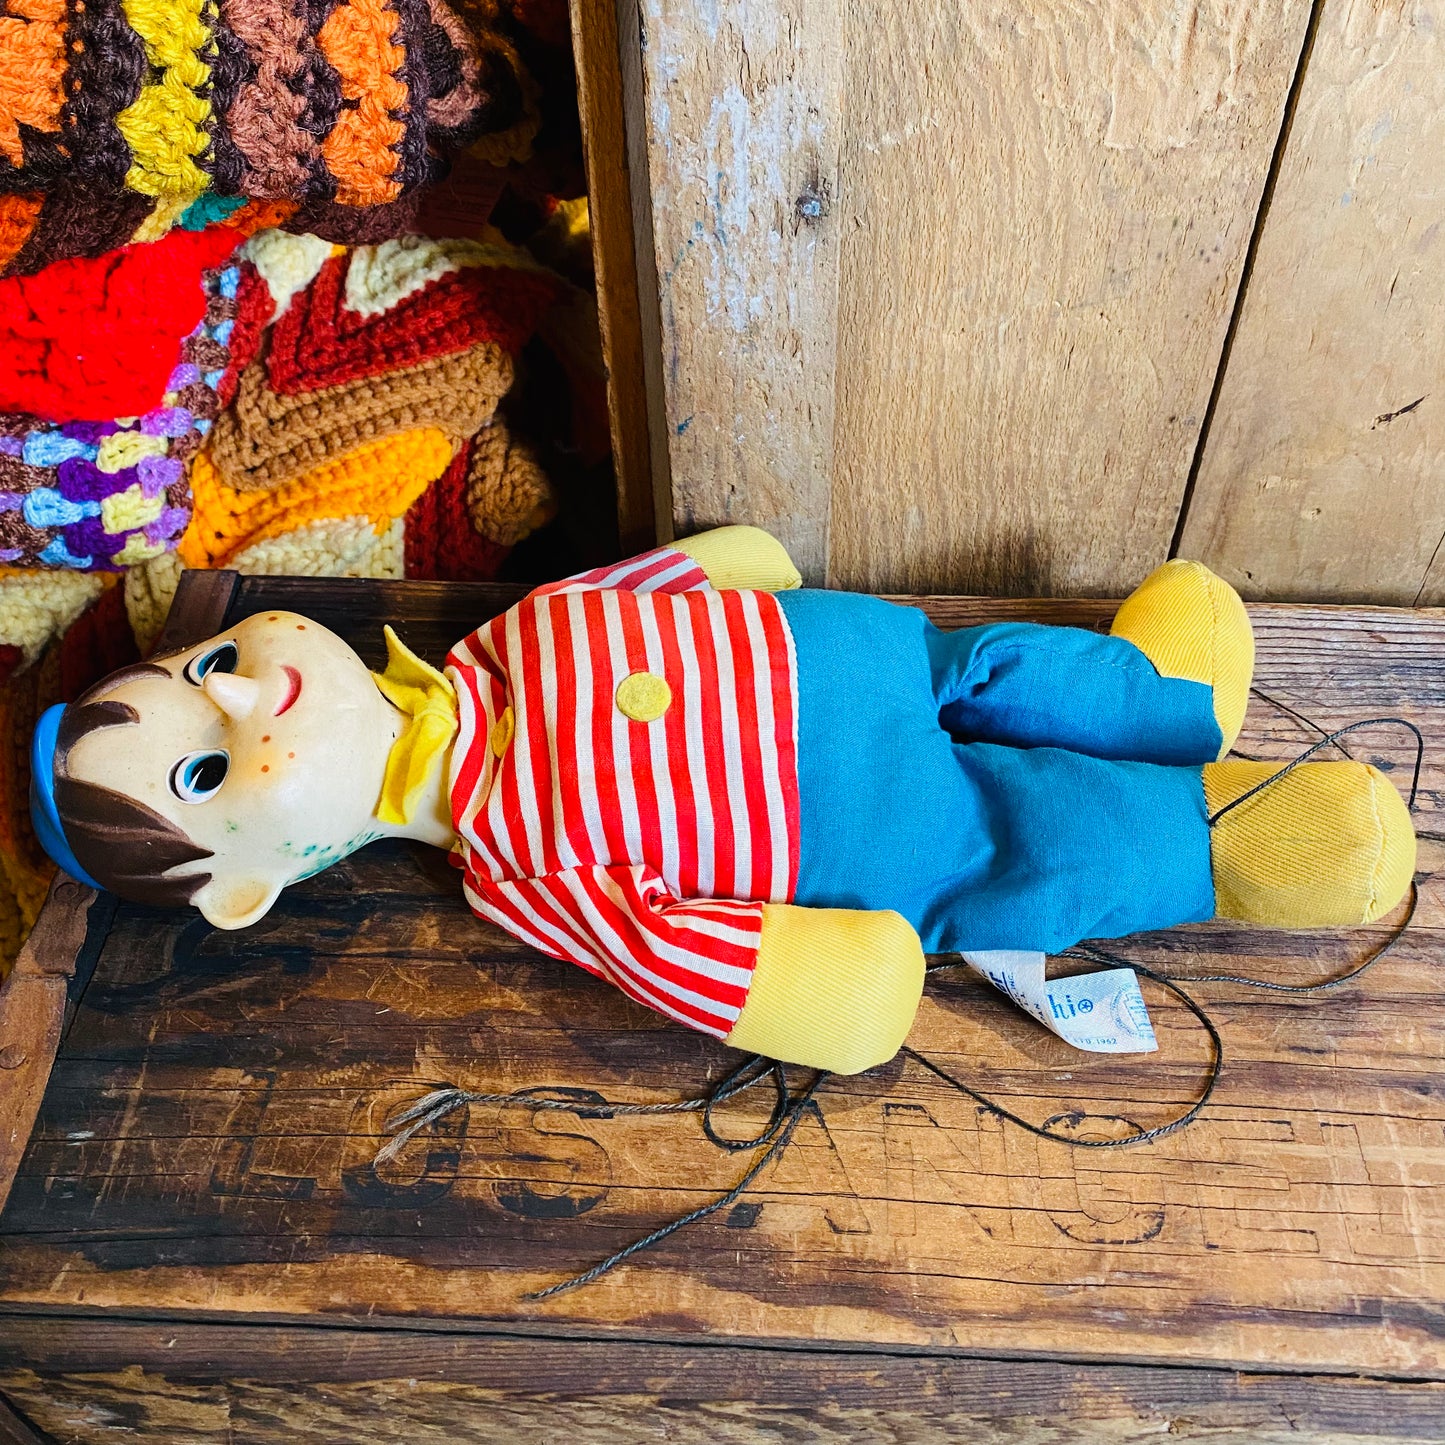 【1962 JPN vintage】knickerbocker ピノキオ 人形